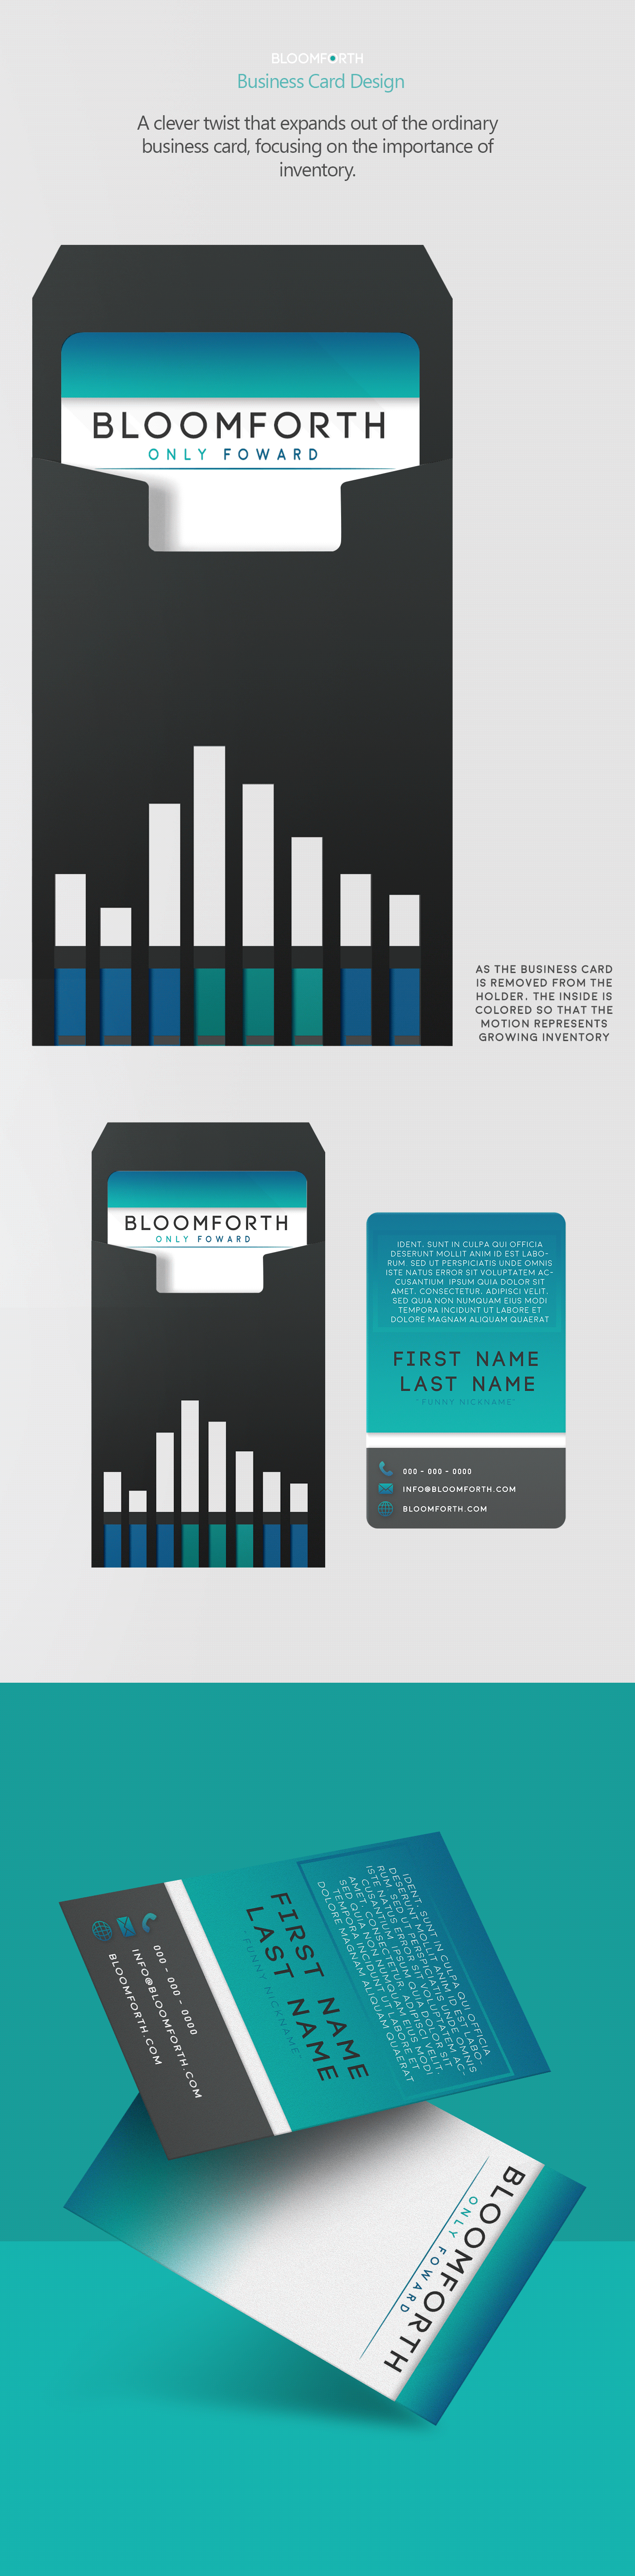 Business card design business card